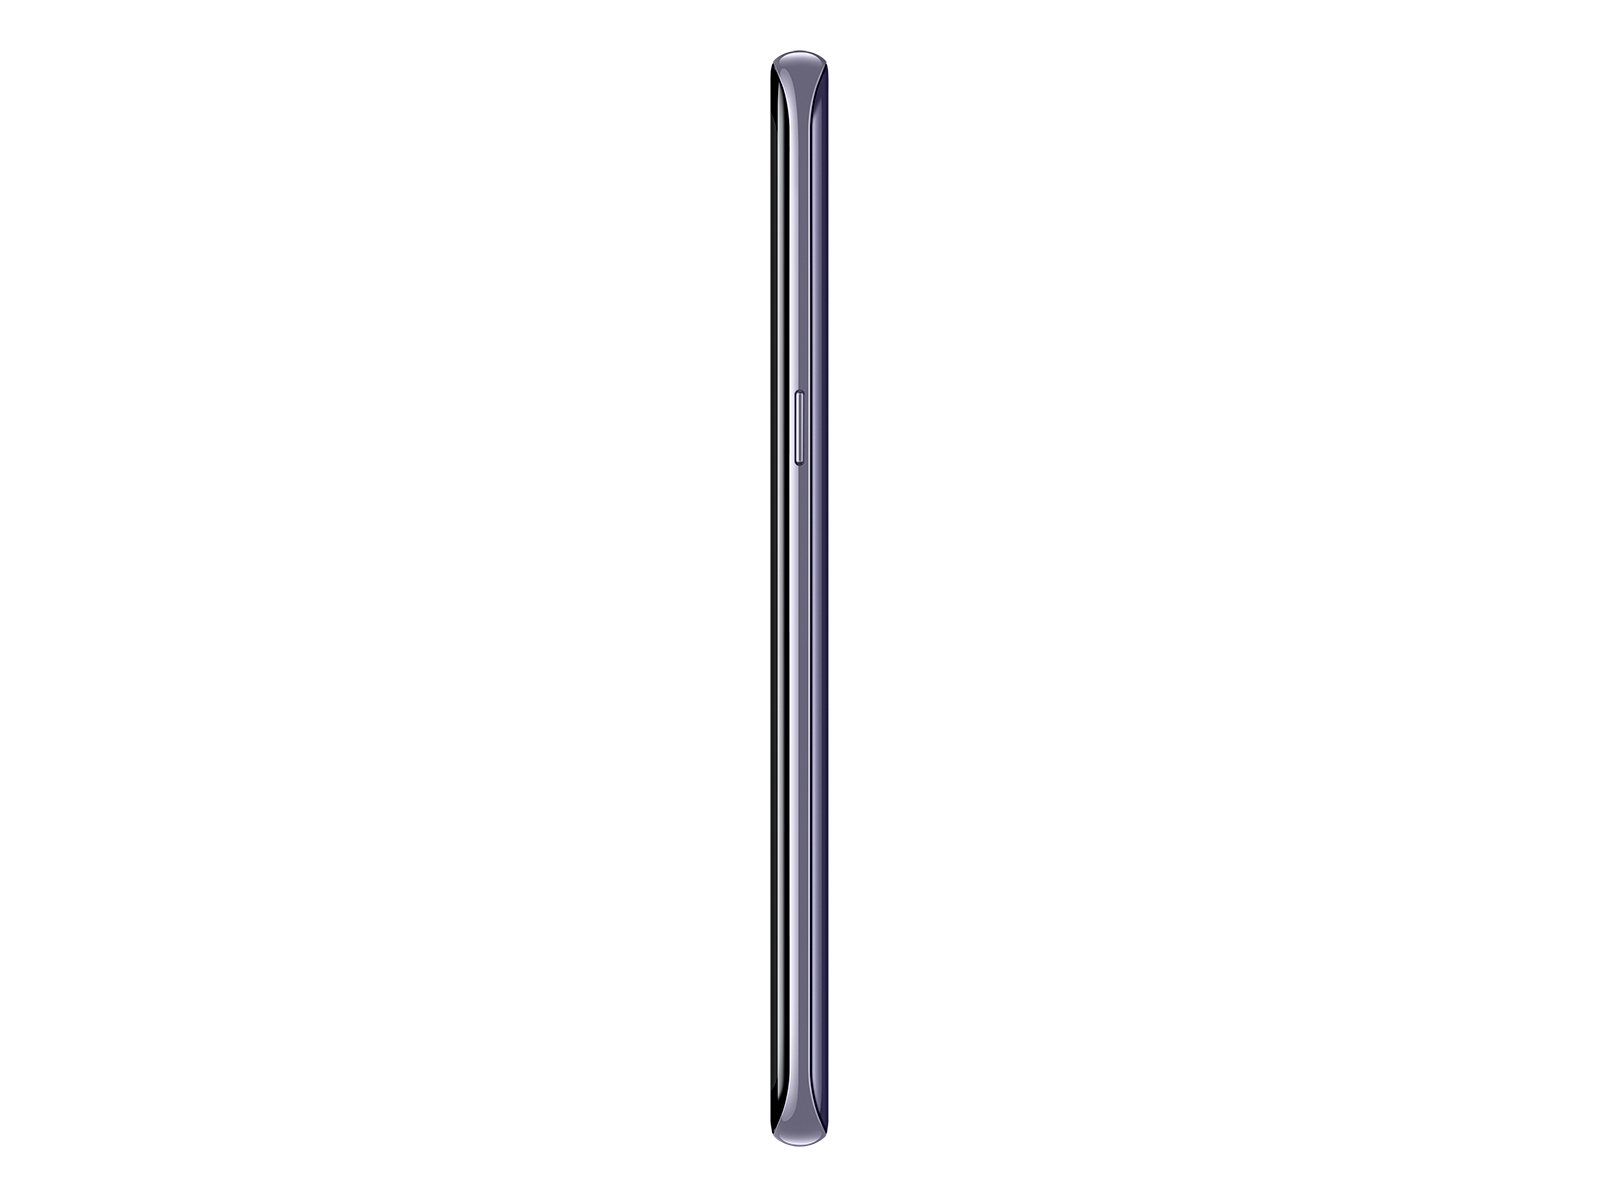 Thumbnail image of Galaxy S8 64GB (Sprint)